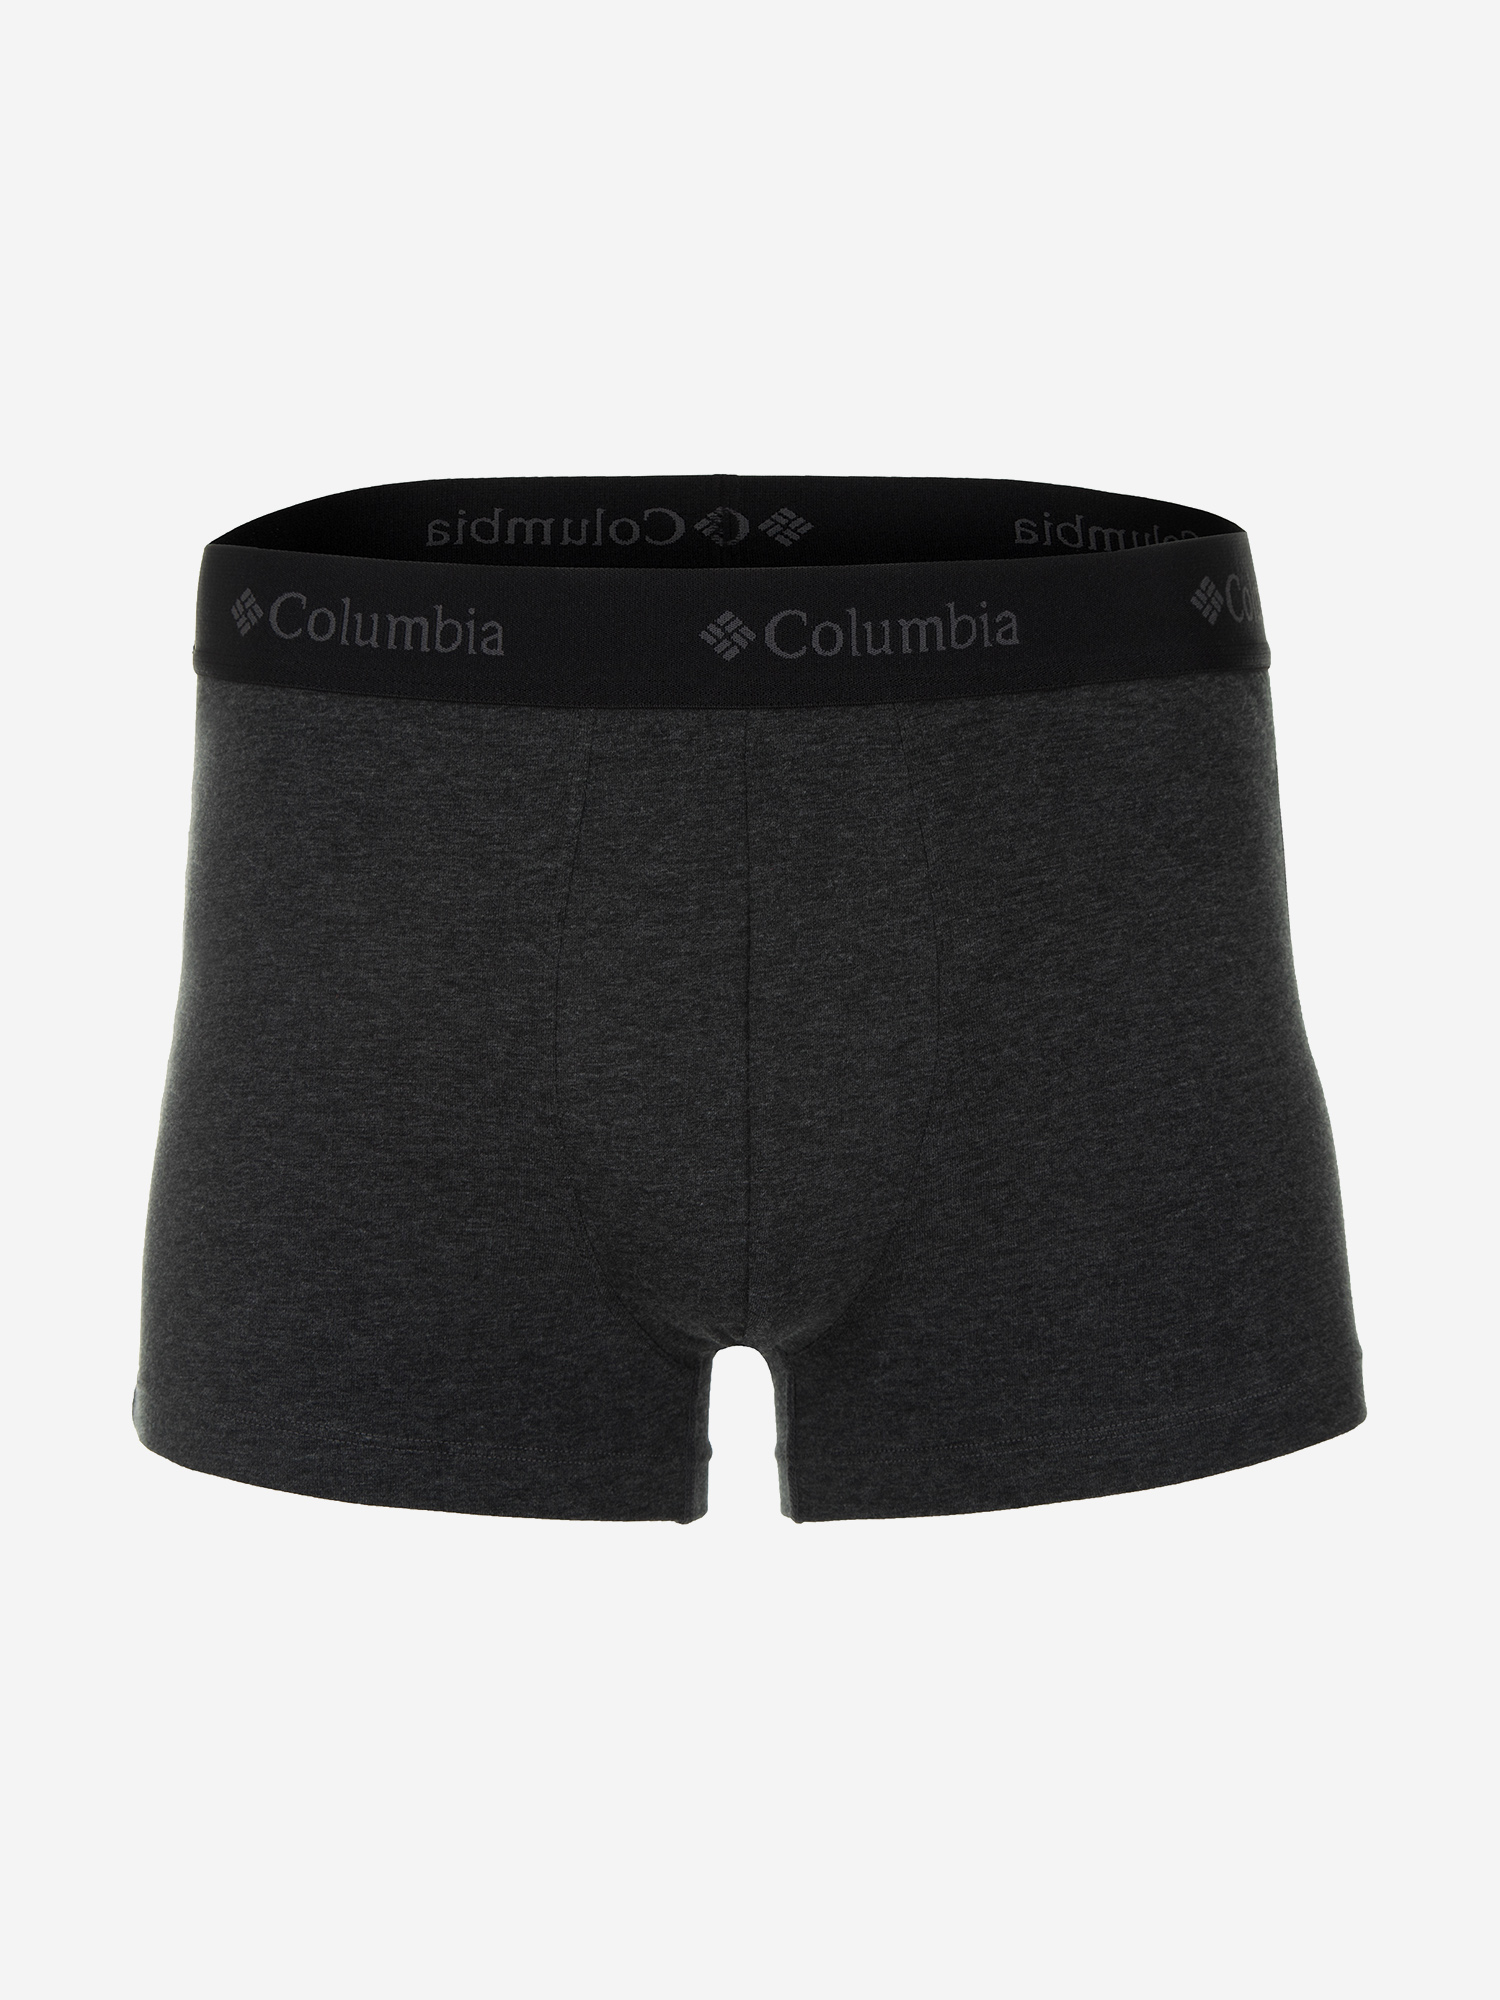 фото Трусы мужские, 1 шт. columbia cotton/stretch men's underwear, серый, размер 44-46